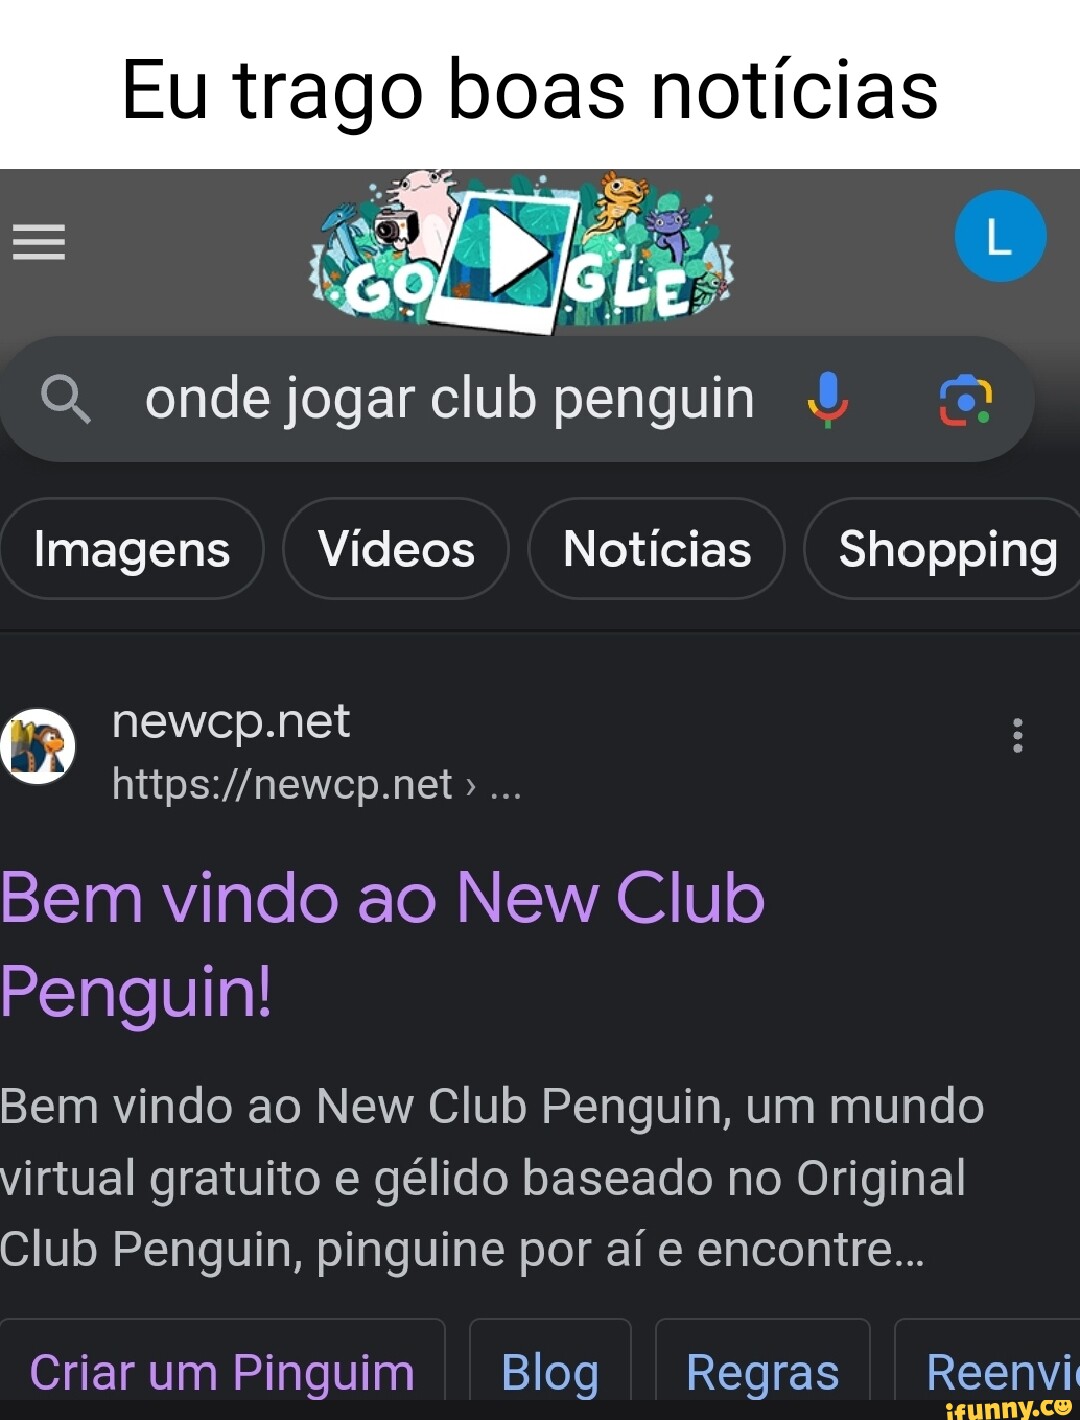 Club Penguin Memes added a new photo. - Club Penguin Memes